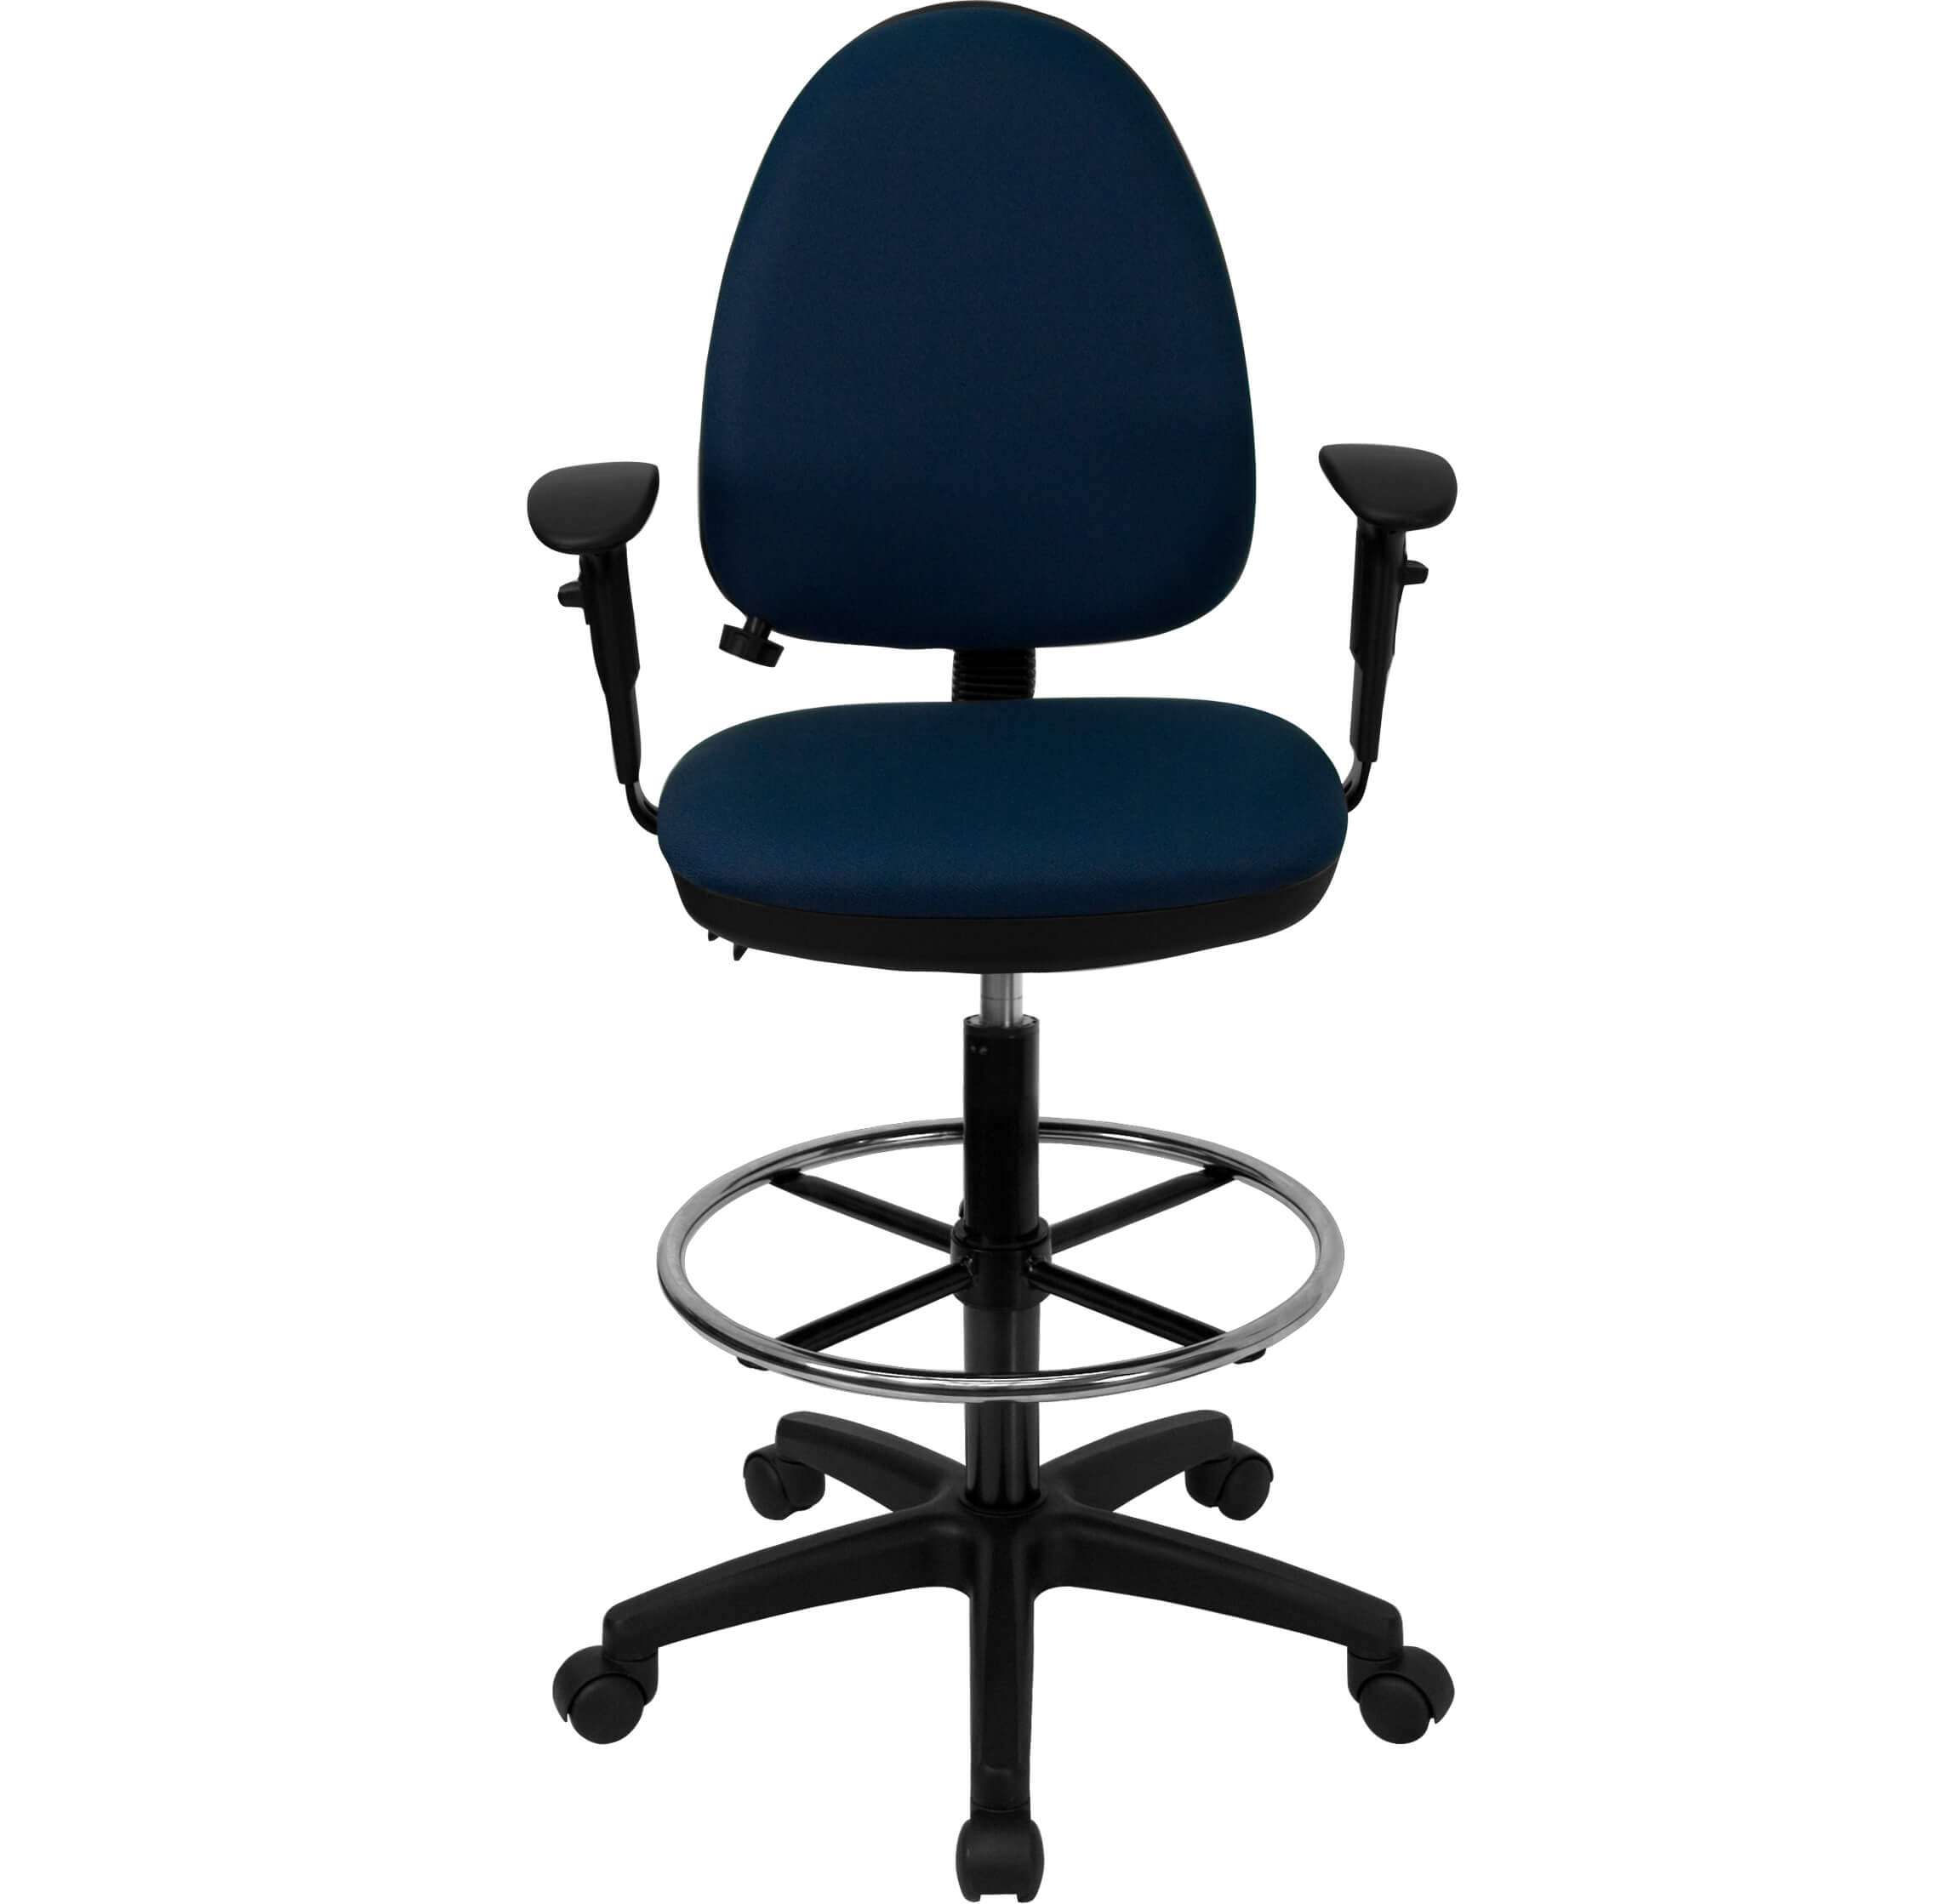 Cool desk chairs CUB WL A654MG NVY AD GG FLA